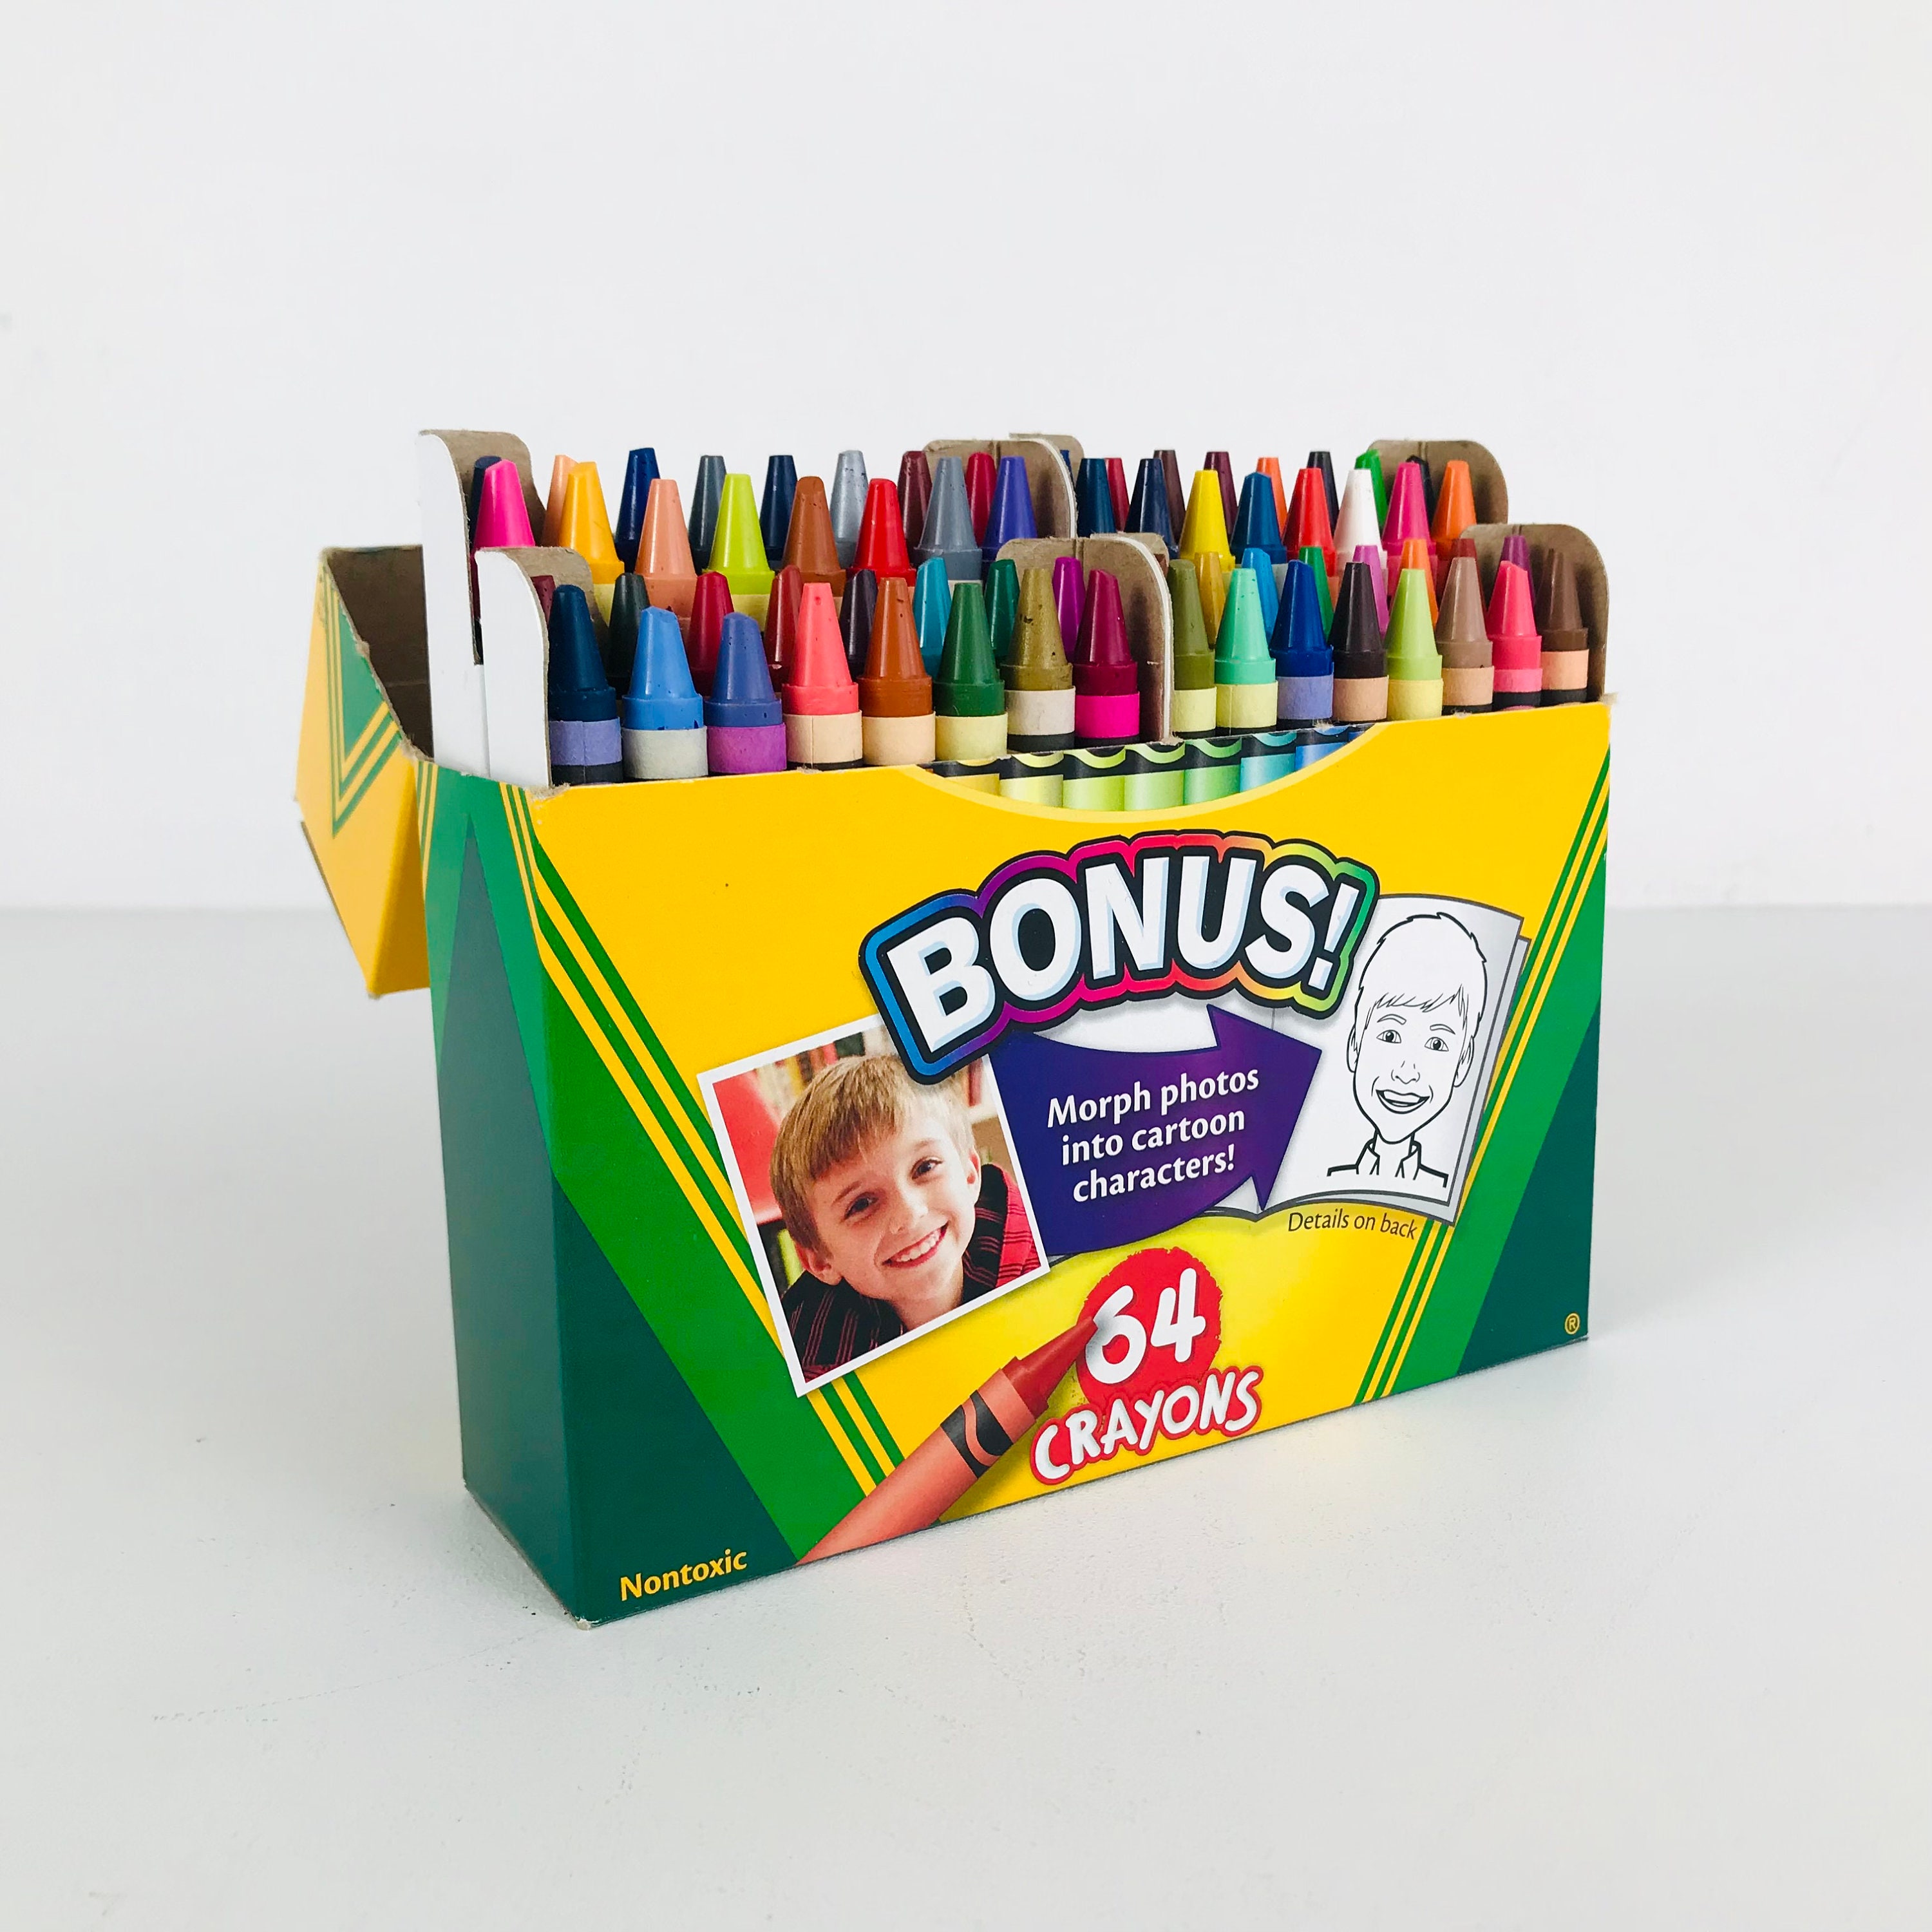 Crayola - Mini Kids Colours And Shapes Album - The Model Shop